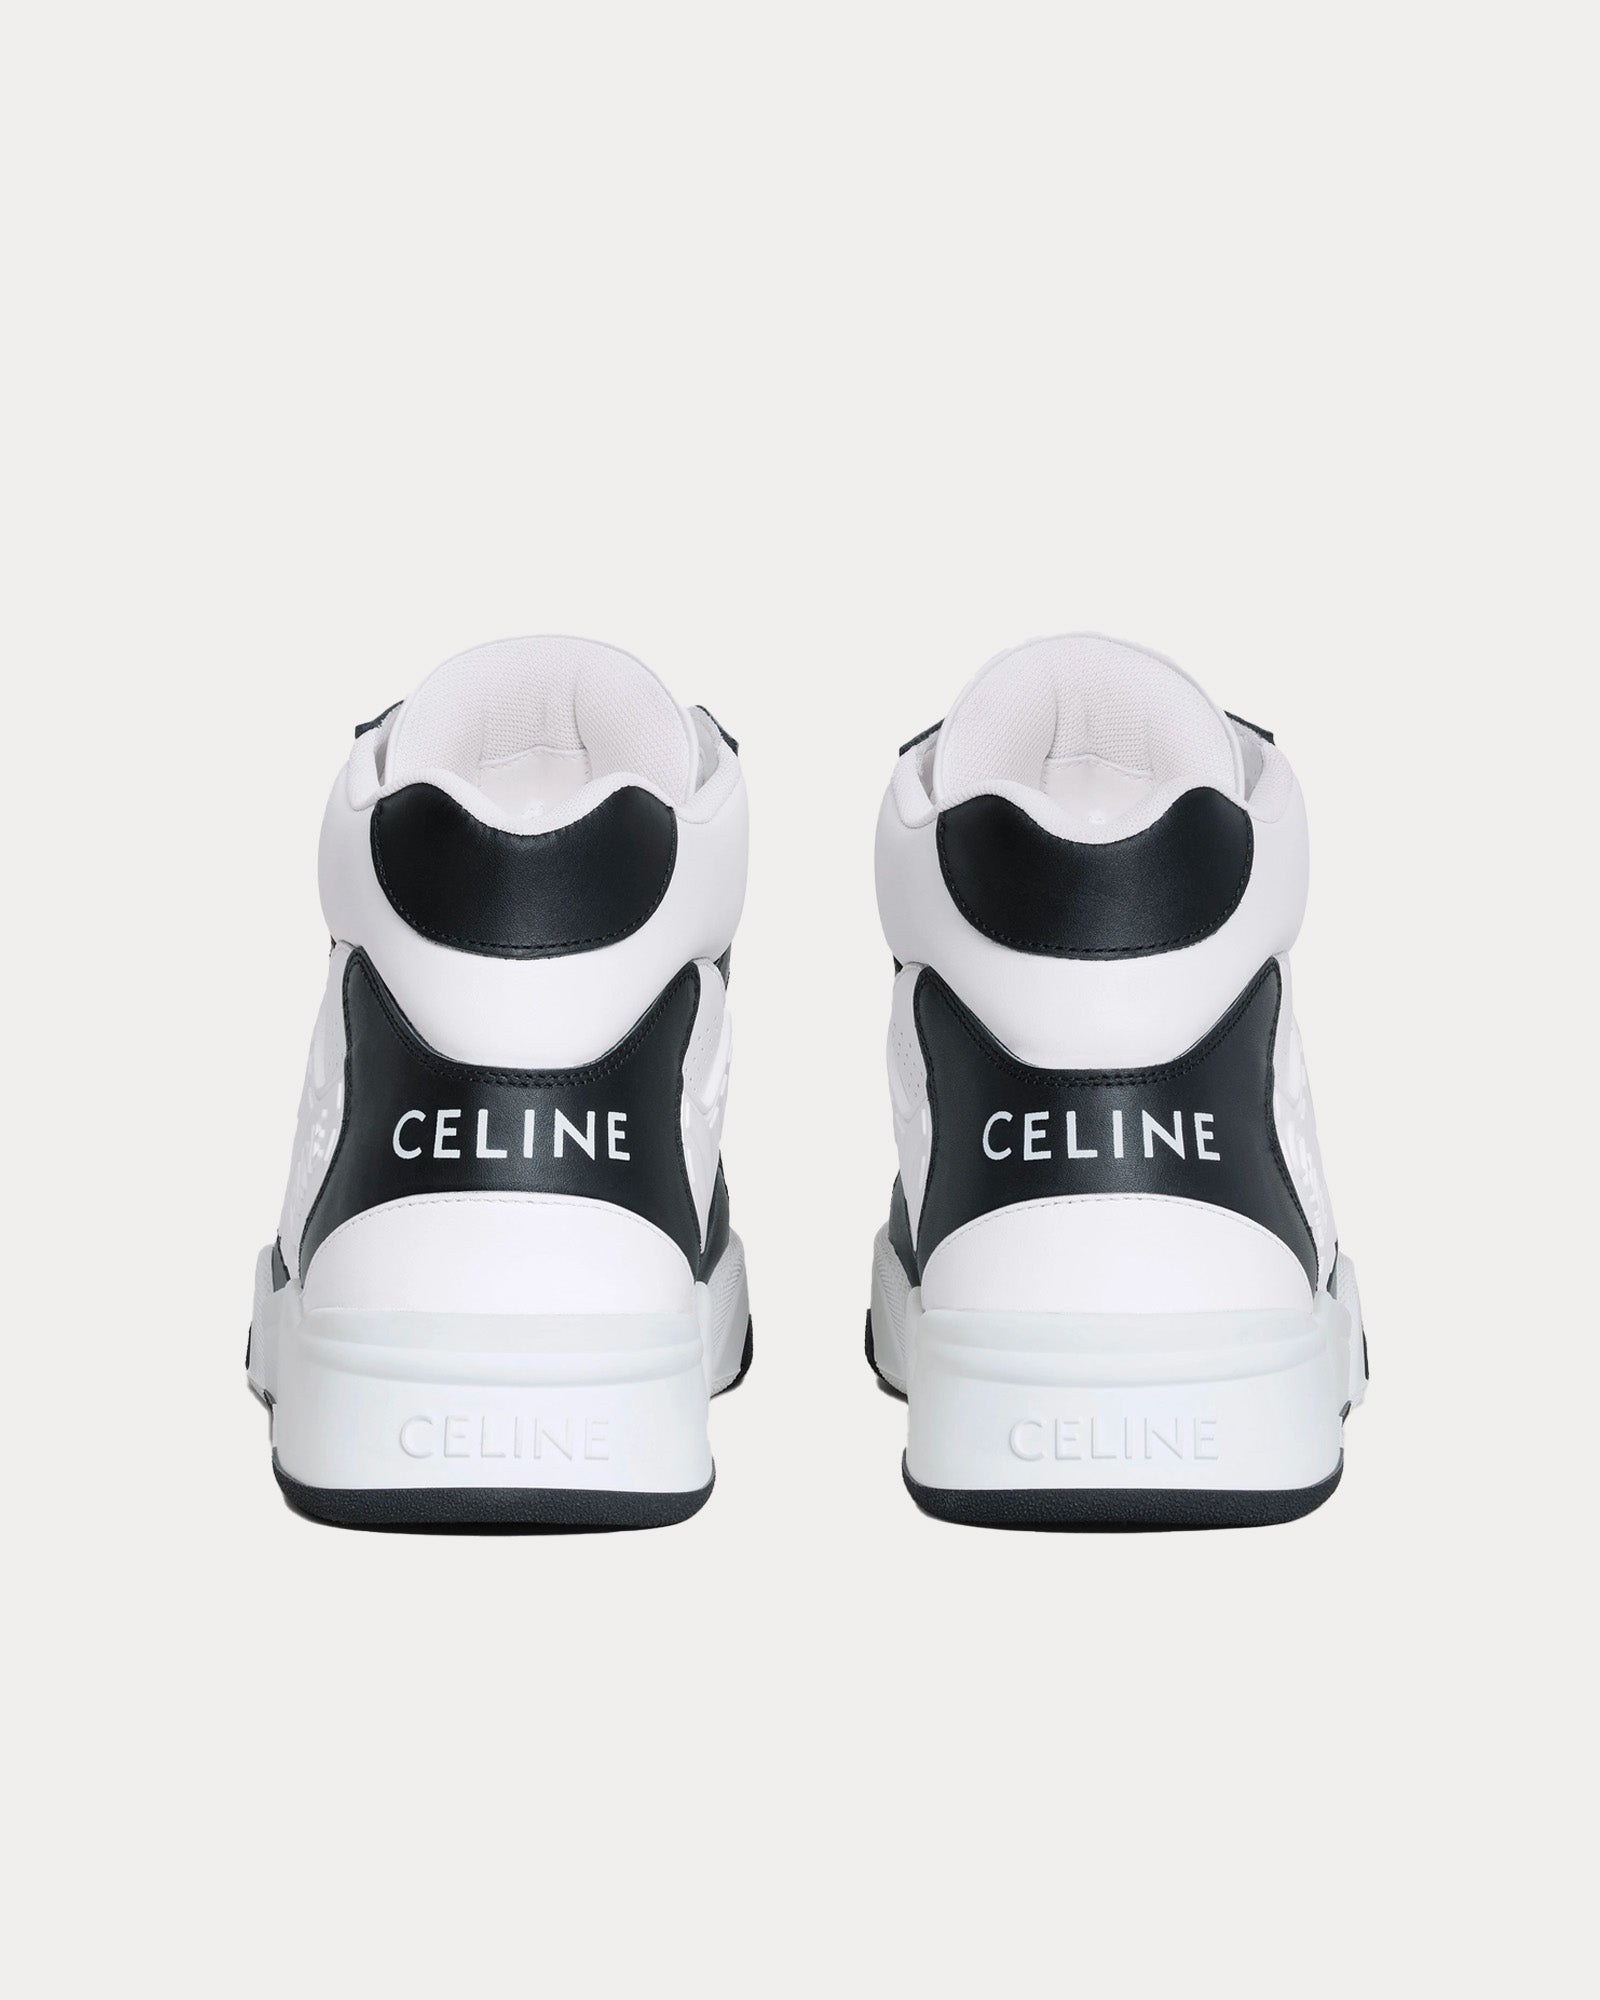 Celine - CT-06 Calfskin Optic White / Black High Top Sneakers